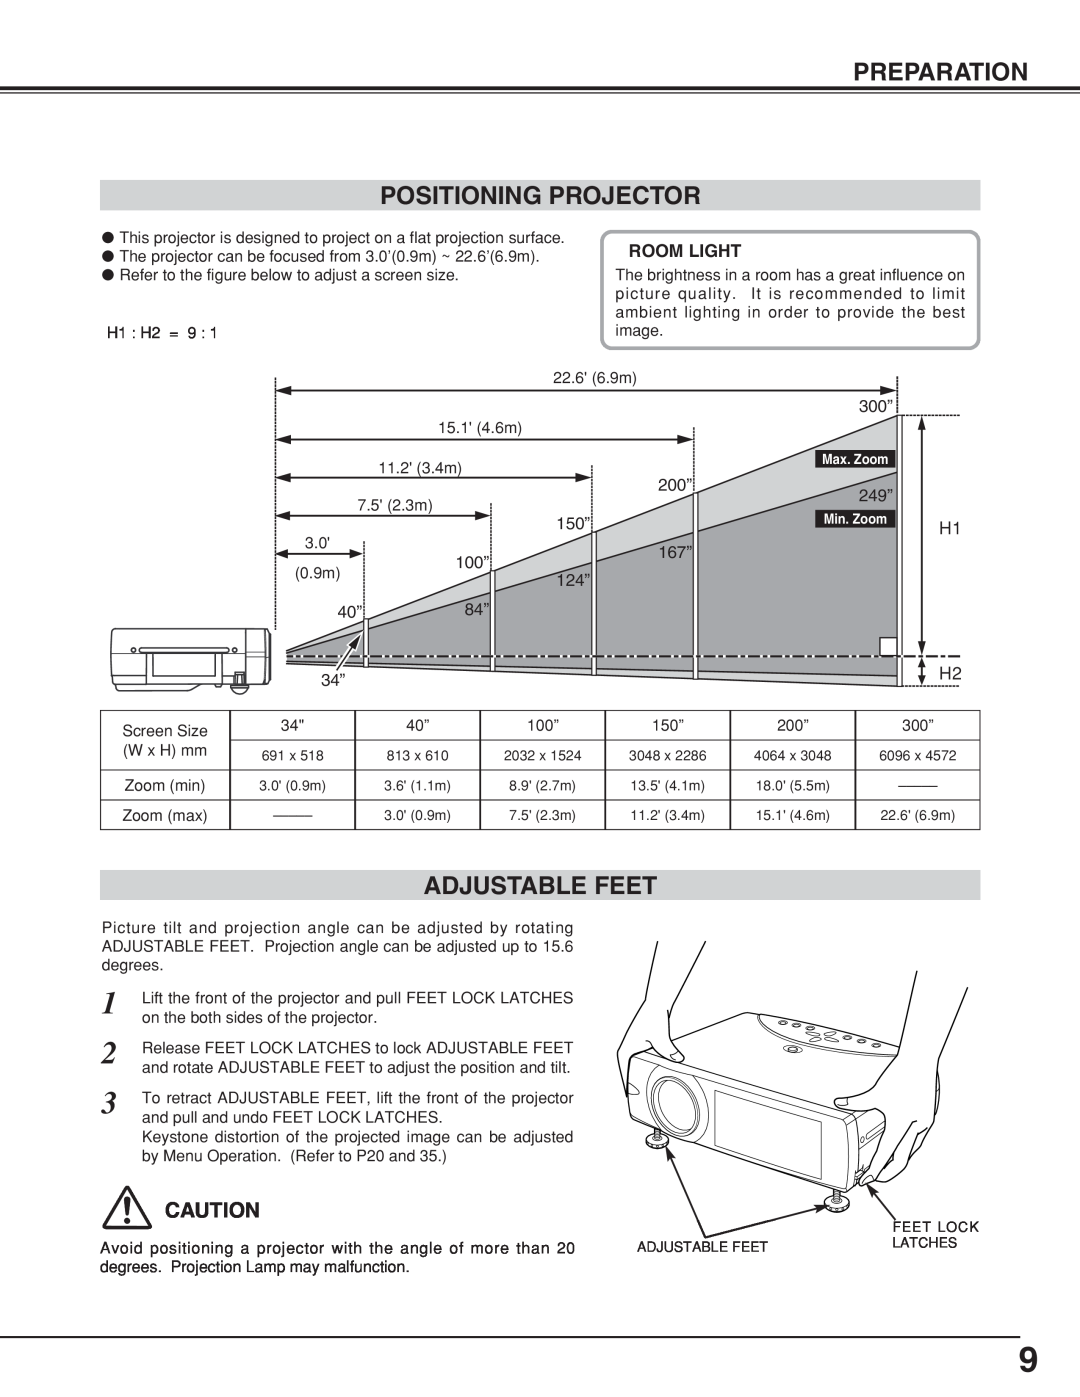 BOXLIGHT CP-306t manual Preparation Positioning Projector, Adjustable Feet, Room Light 